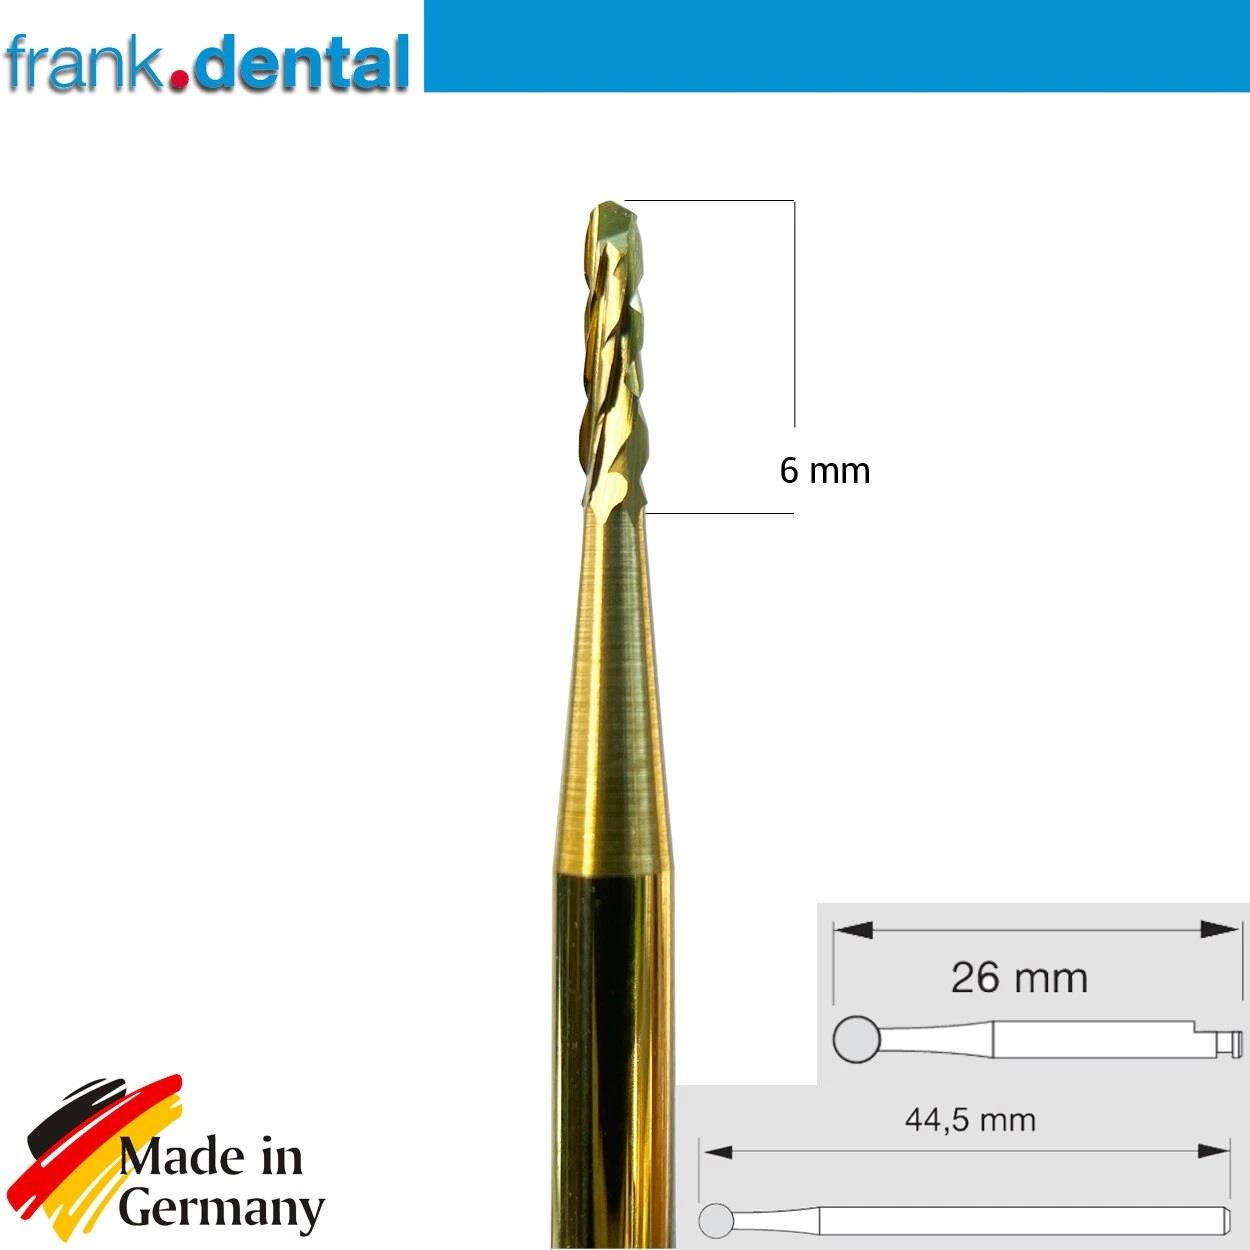 DentrealStore - Frank Dental Titanium Coated Carbide Lindemann Bone Cutter - 163A HP